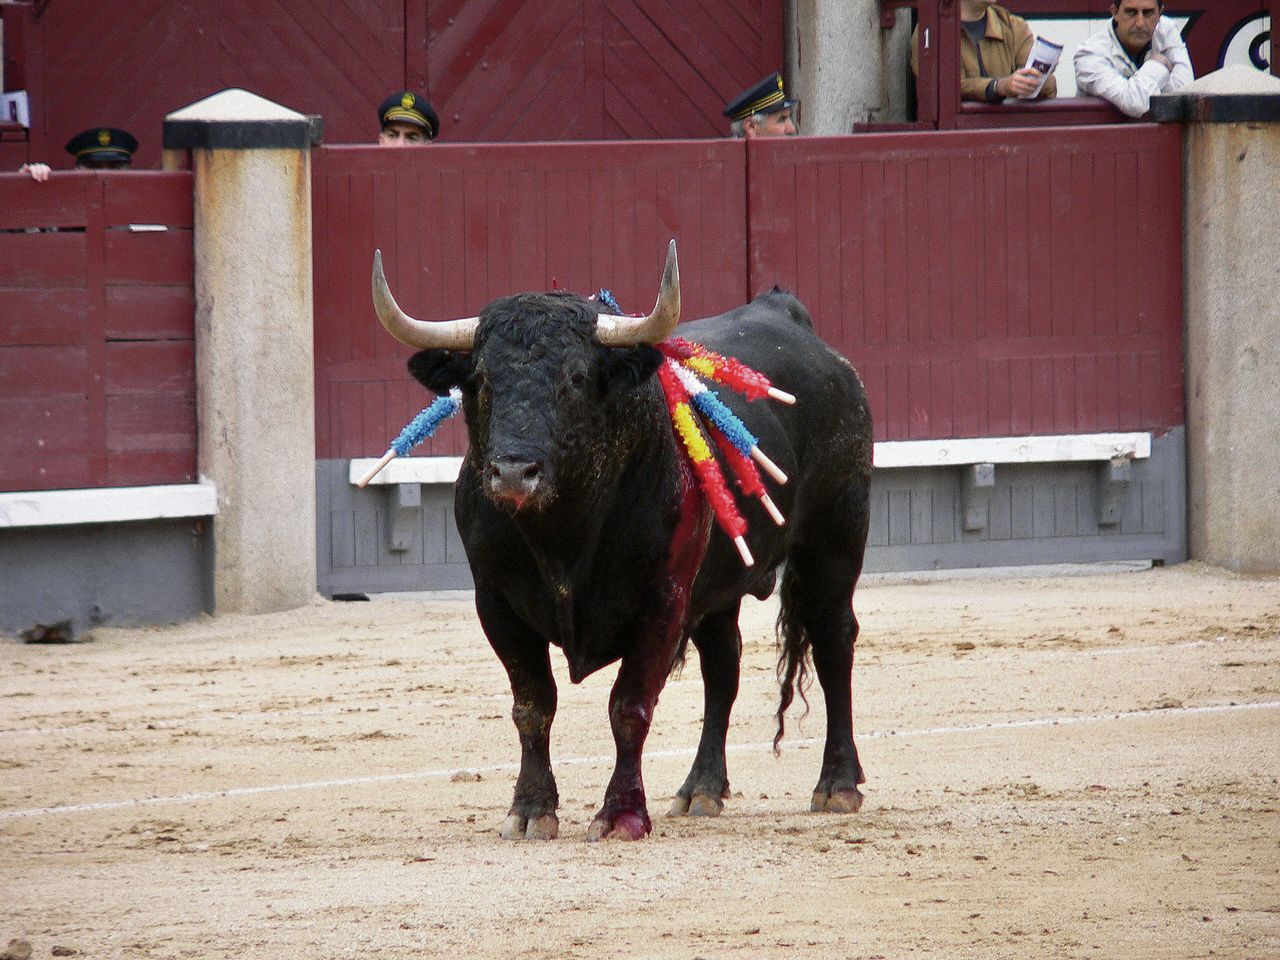 Stier in de Plaza de Toros de Las Ventas in Madrid metbanderilla’s in zijn zij.